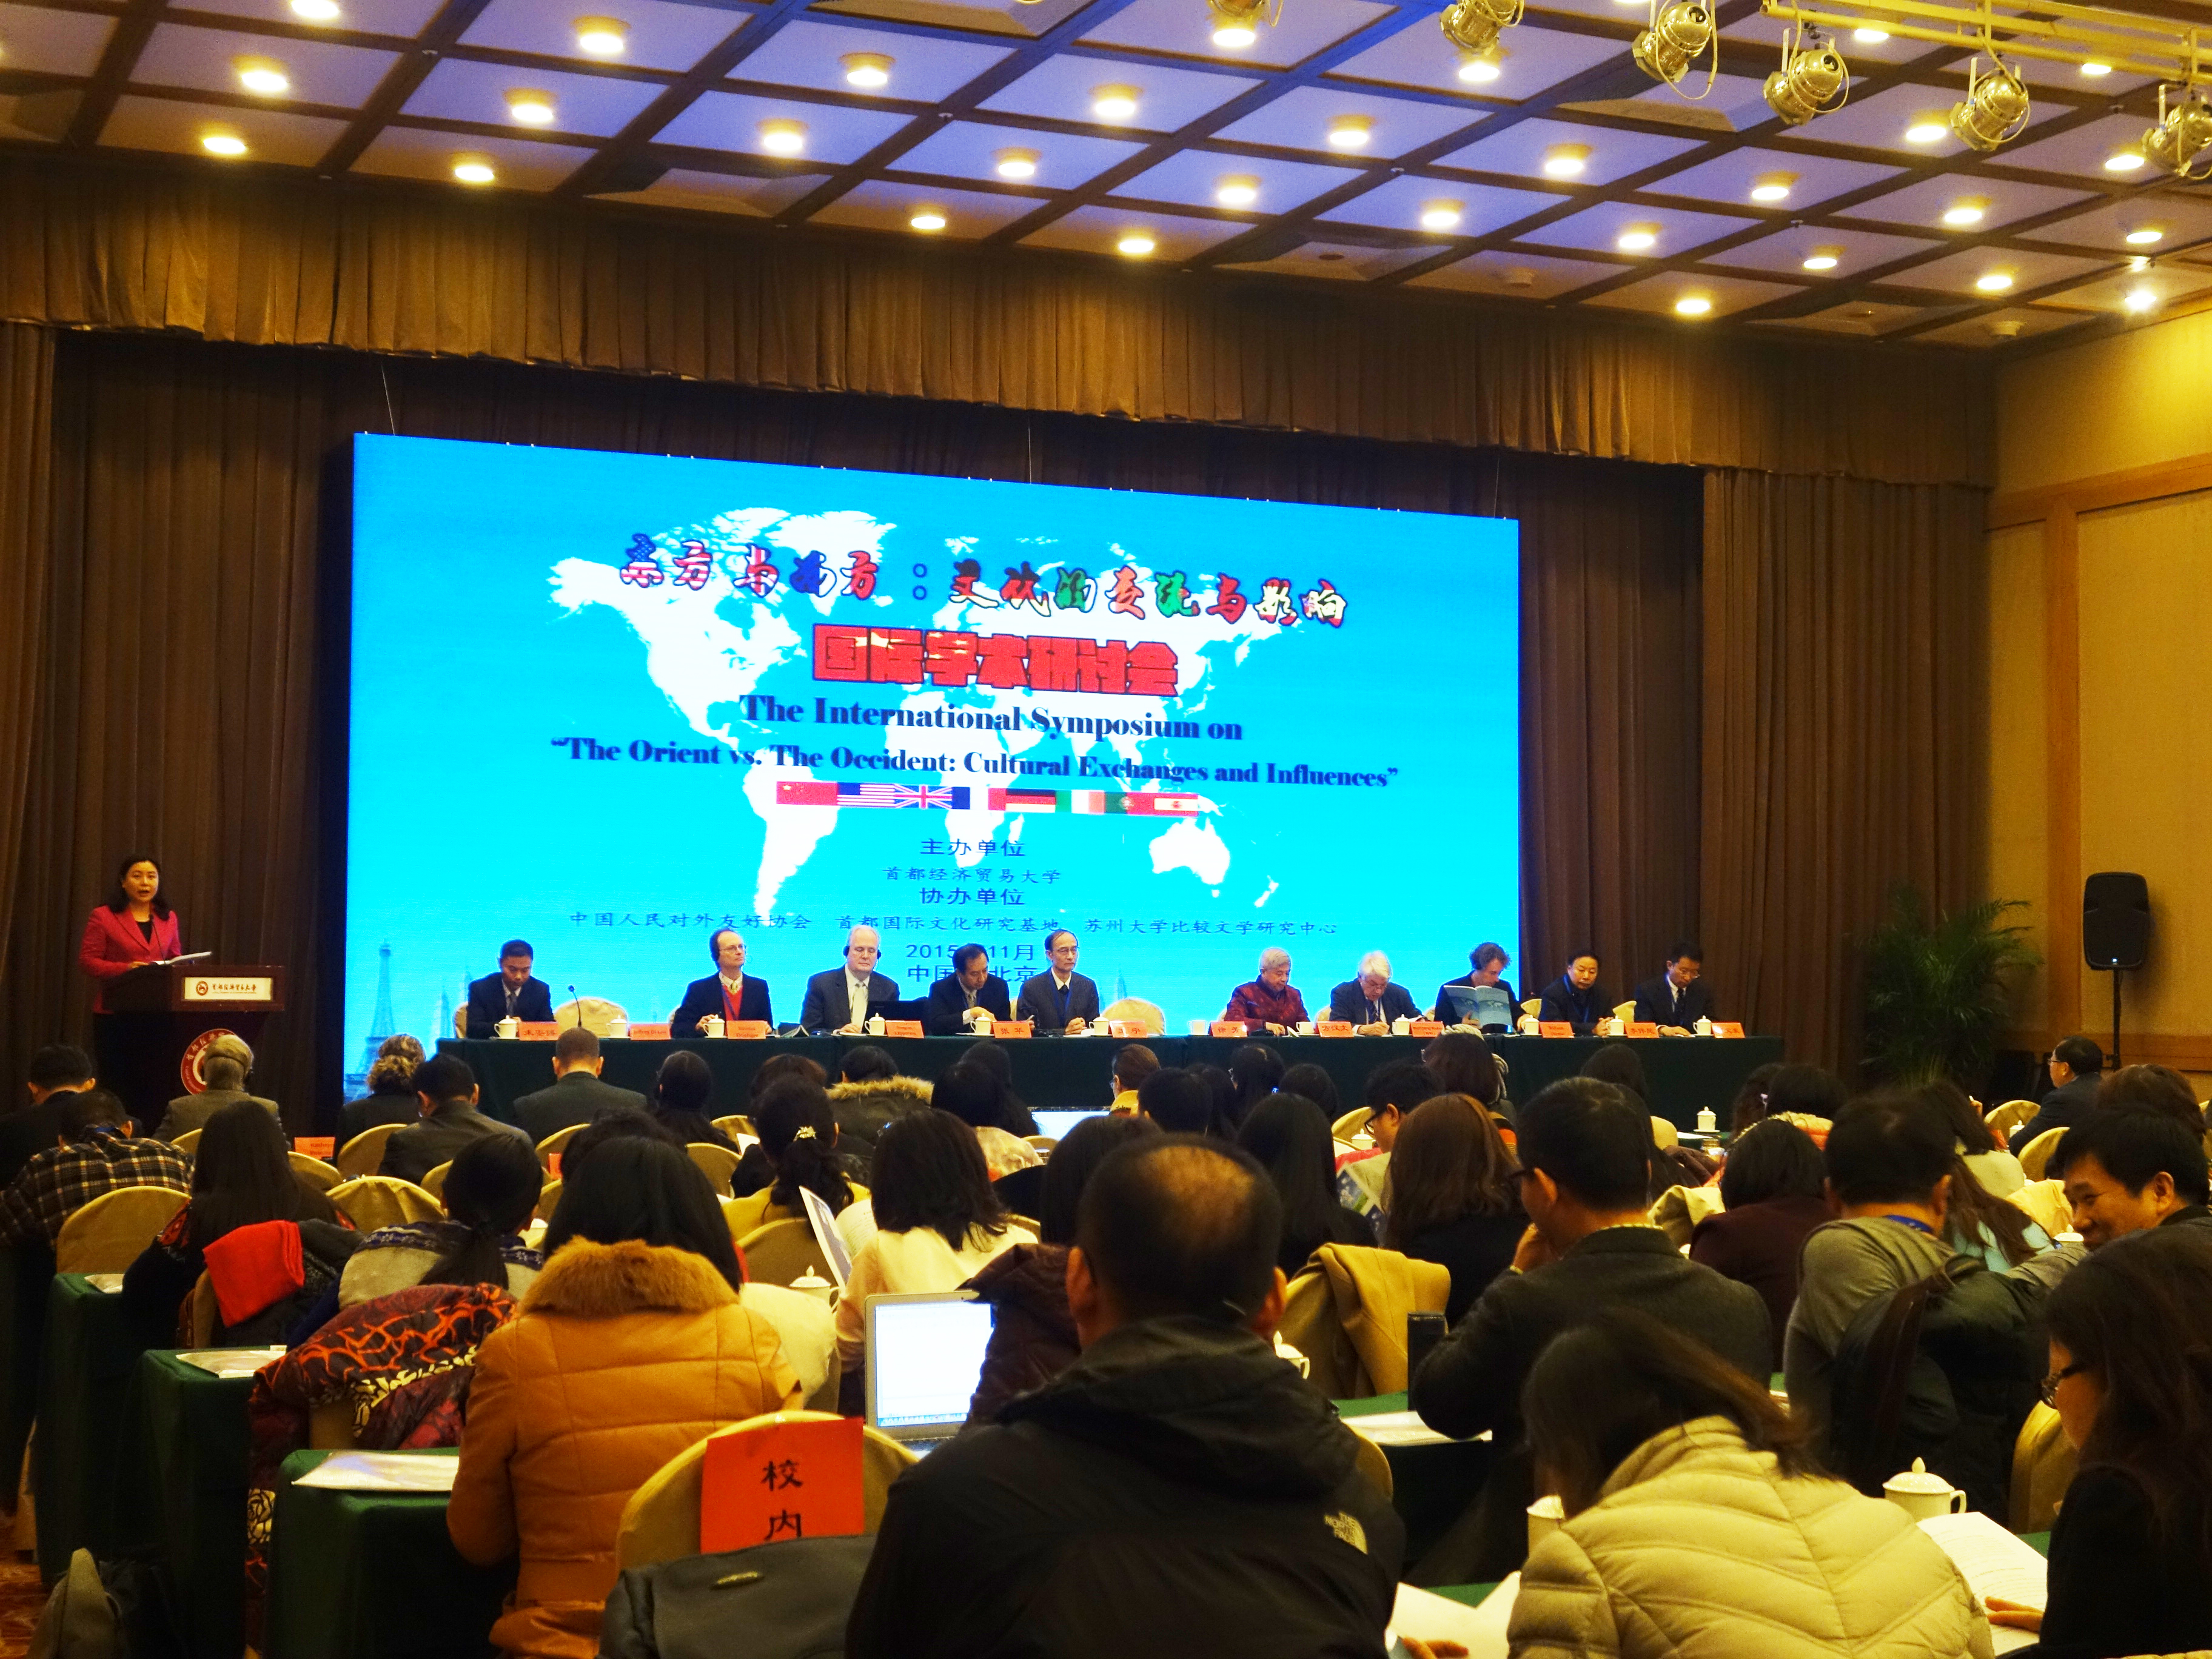 Beijing International Symposium 2016